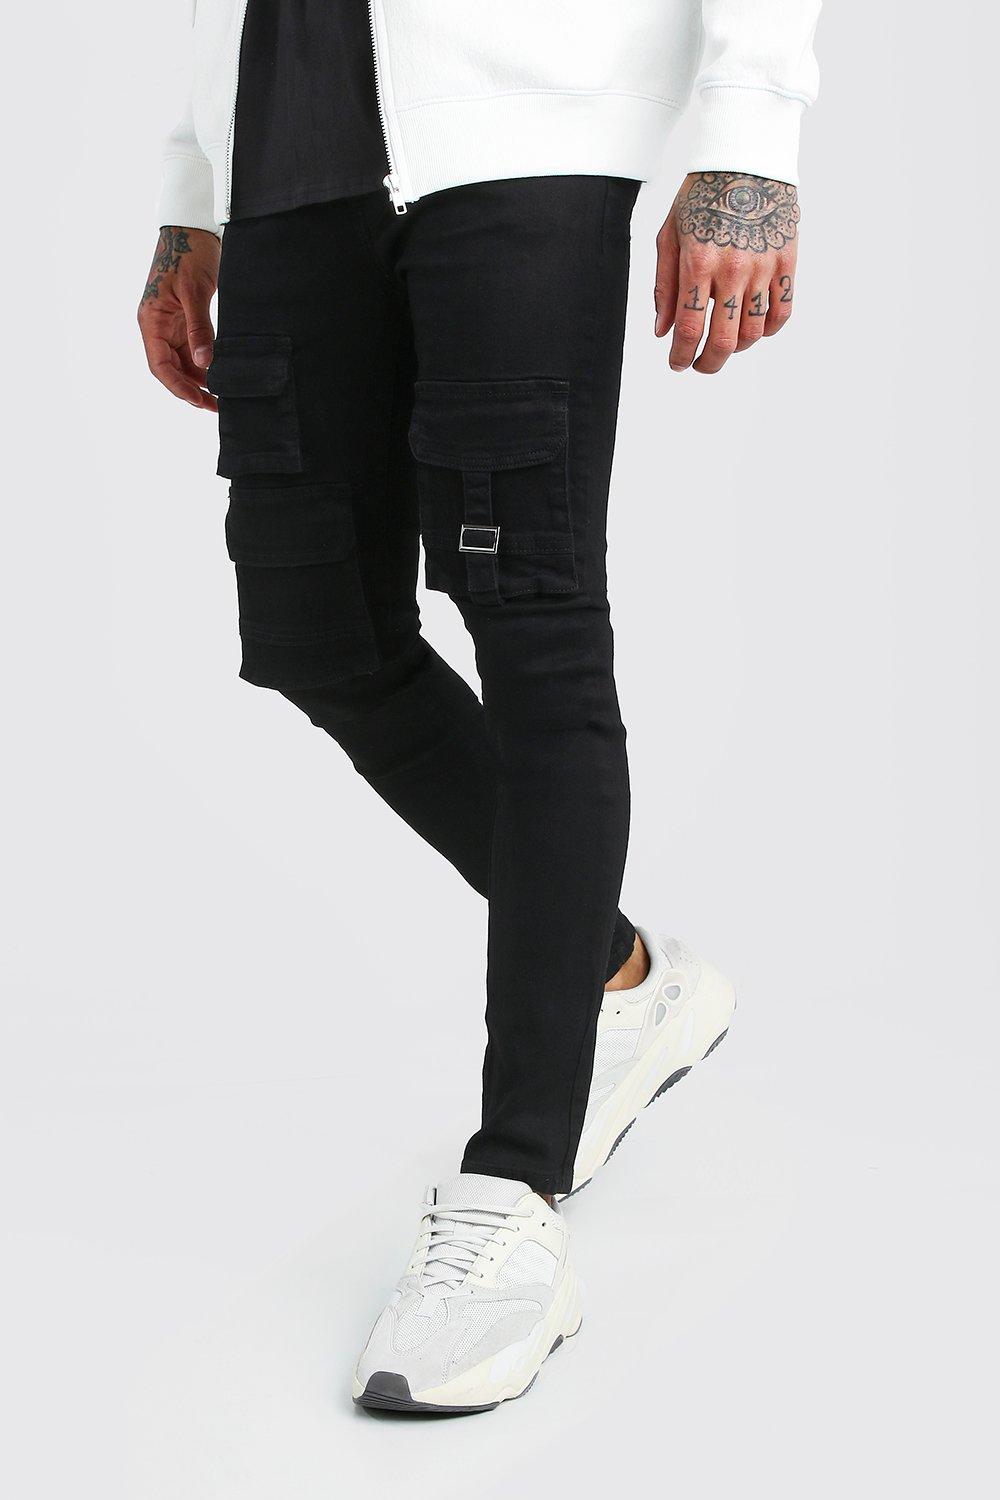 levis 511 skate jeans